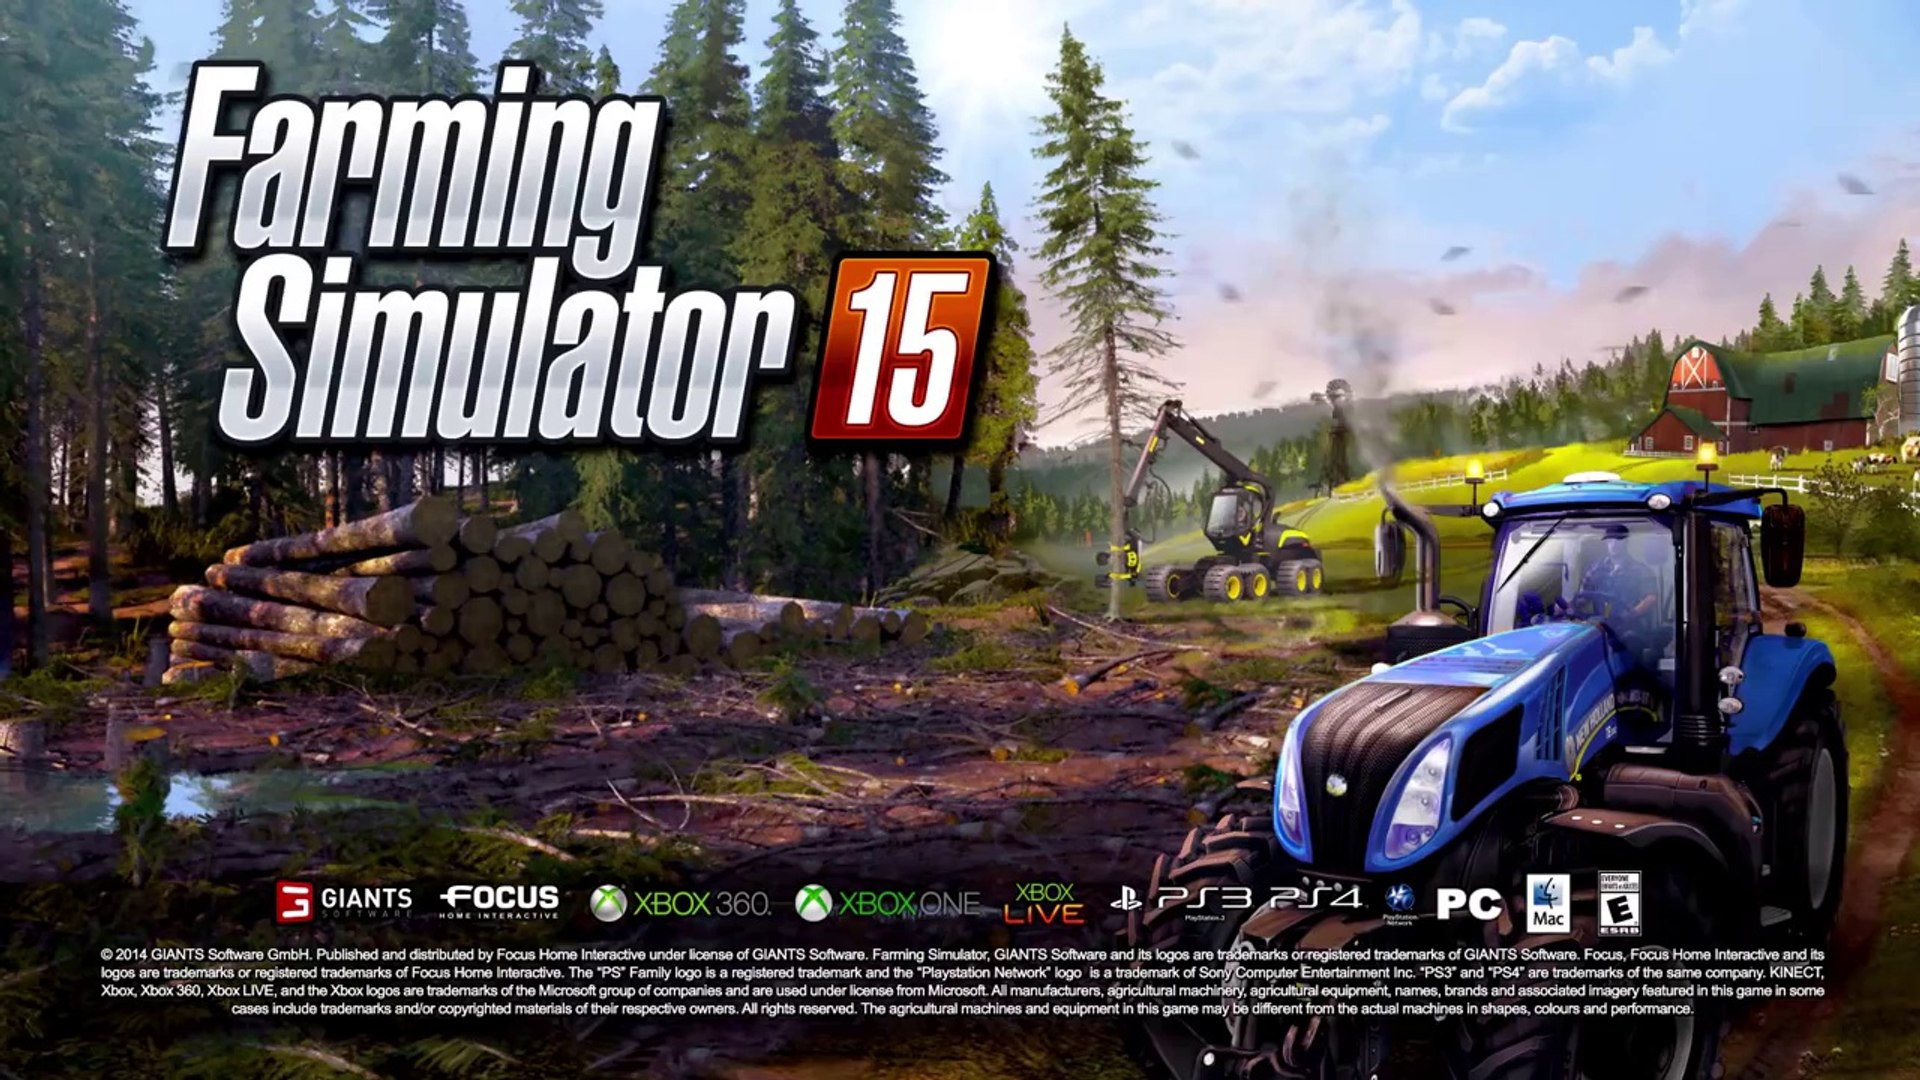 Farming simulator gold. Farming Simulator 15 Xbox 360. Farming Simulator 15 ps3. Farming Simulator 15 ps3 сохранения. Фермер симулятор 15 на хбокс 360 коды.